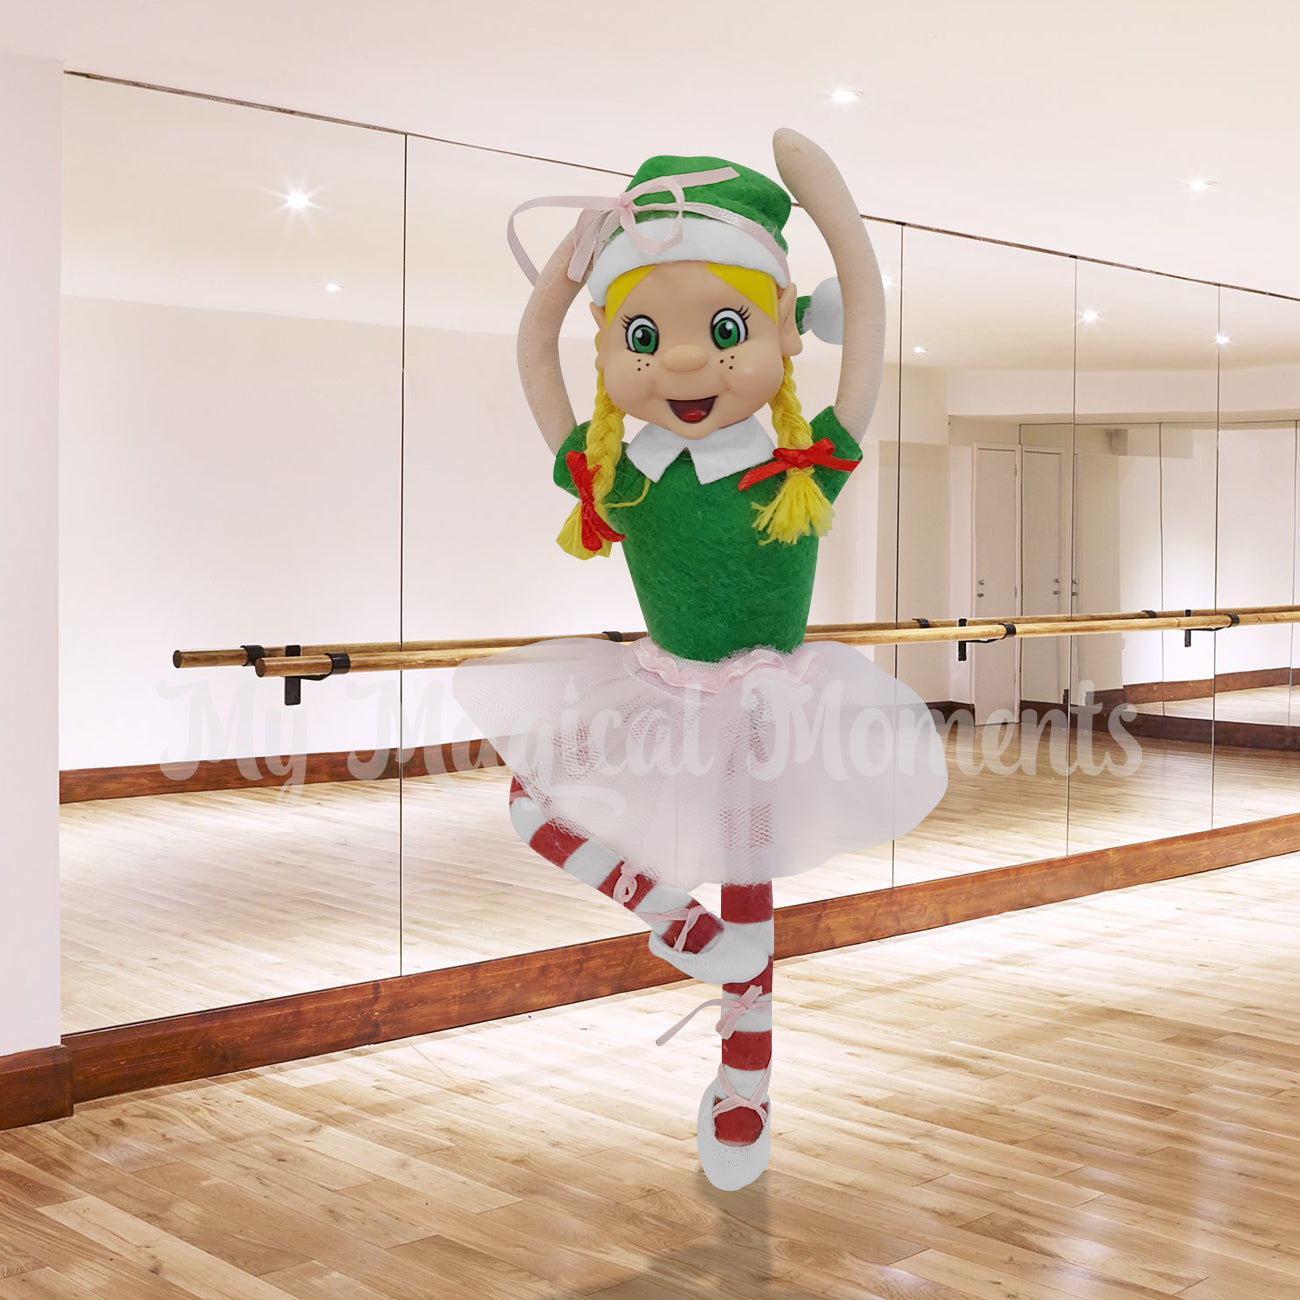 Elf wearing ballet shoes posing in a dance studio